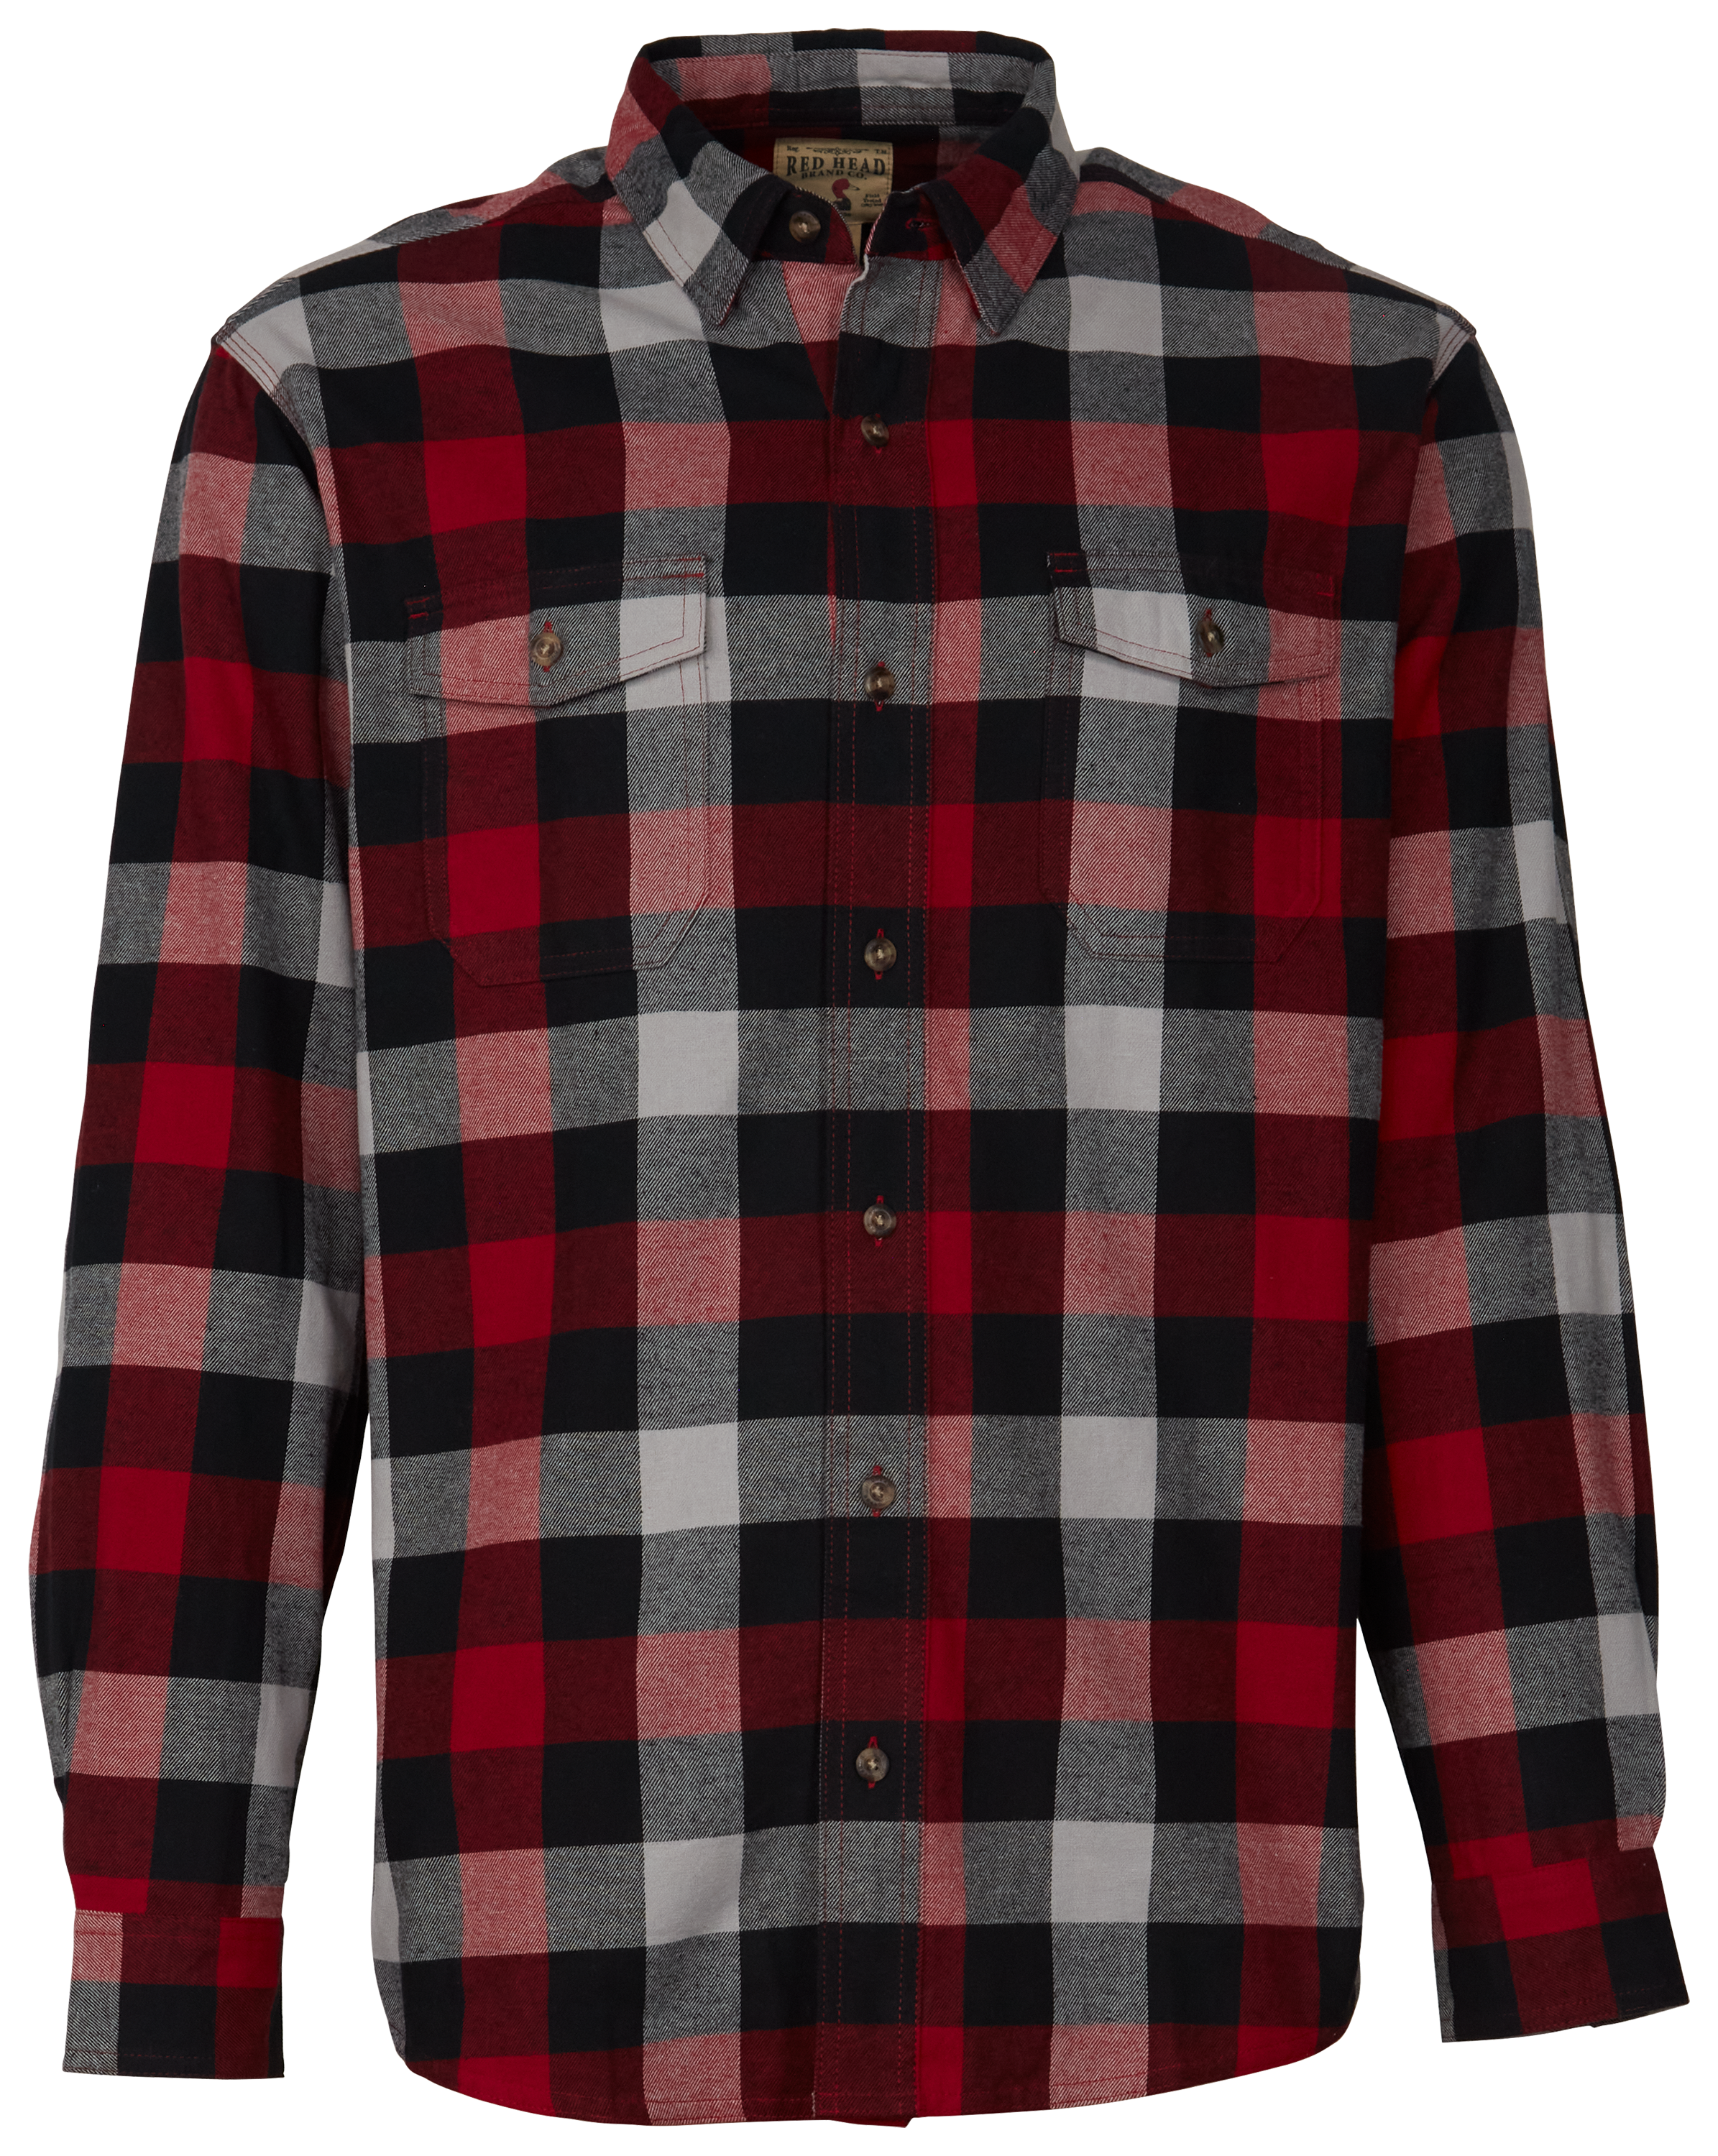 RedHead Buffalo Creek Flannel Long-Sleeve Shirt for Men - Red/Gray - 3XL